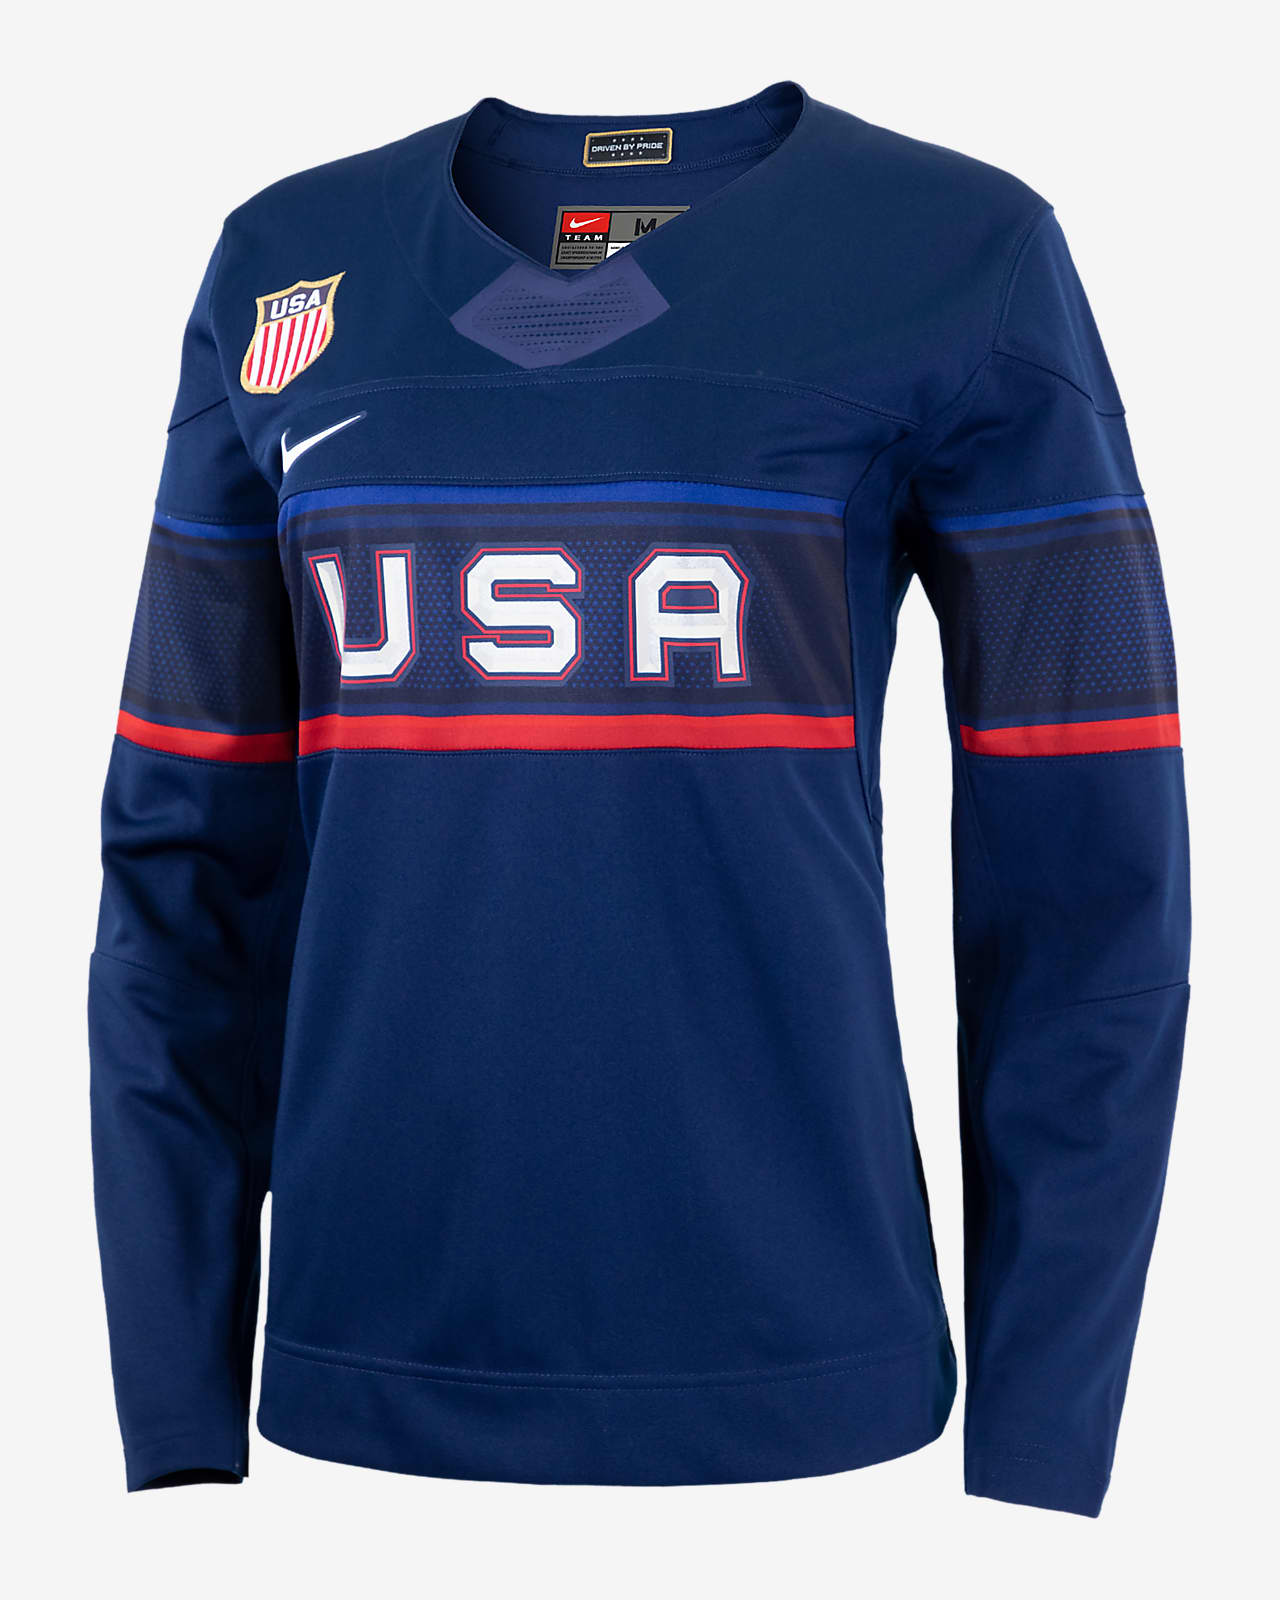 Nike Women's Hockey Jersey in Blue, Size: Small | P34763J423-USA